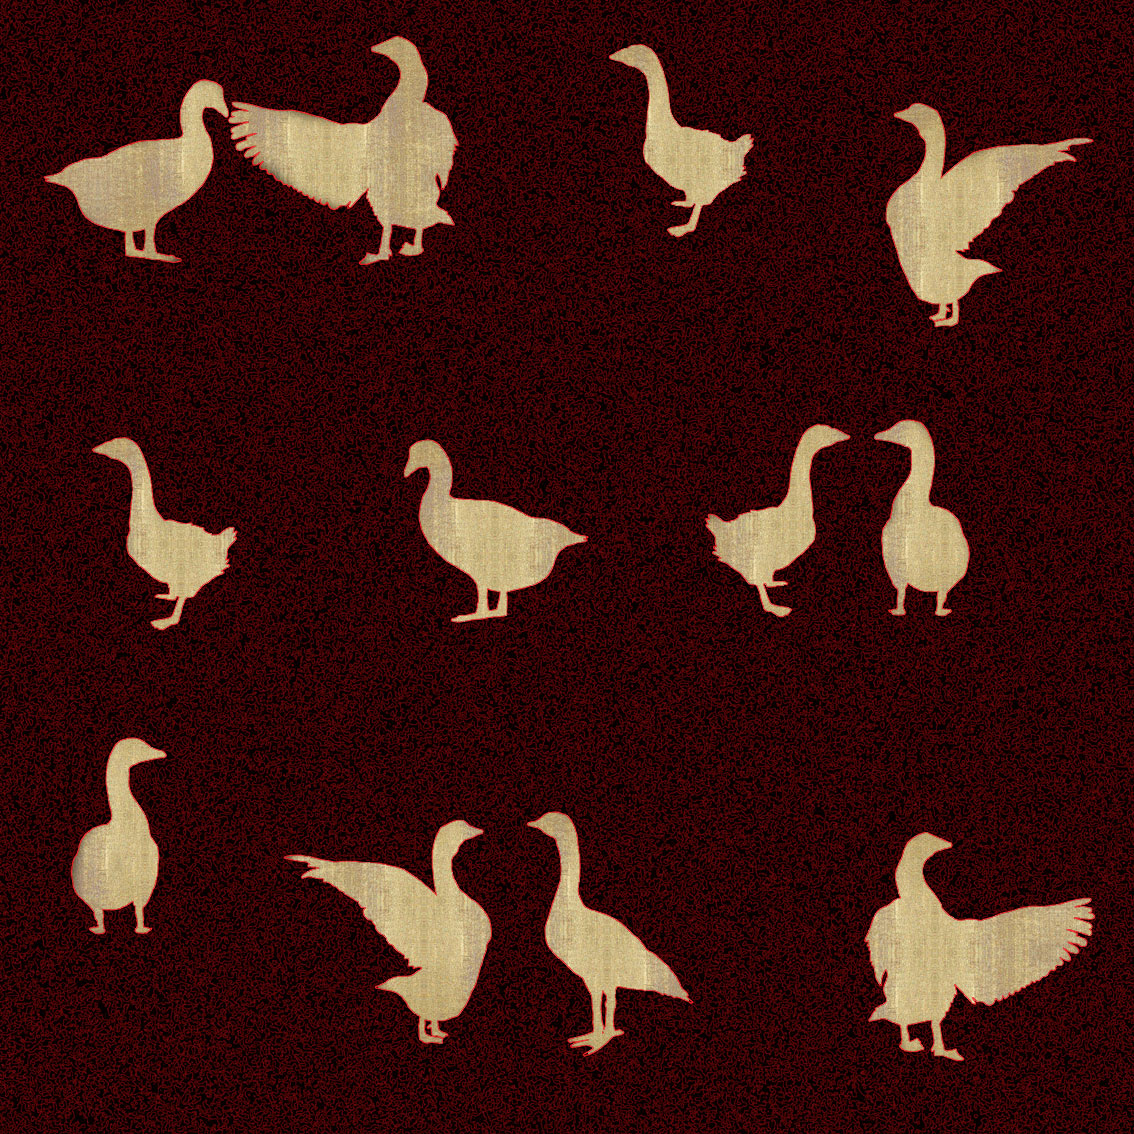 Golden-geese peinture-animalière Thierry Bisch artiste peintre contemporain animaux tableau art décoration biodiversité conservation 